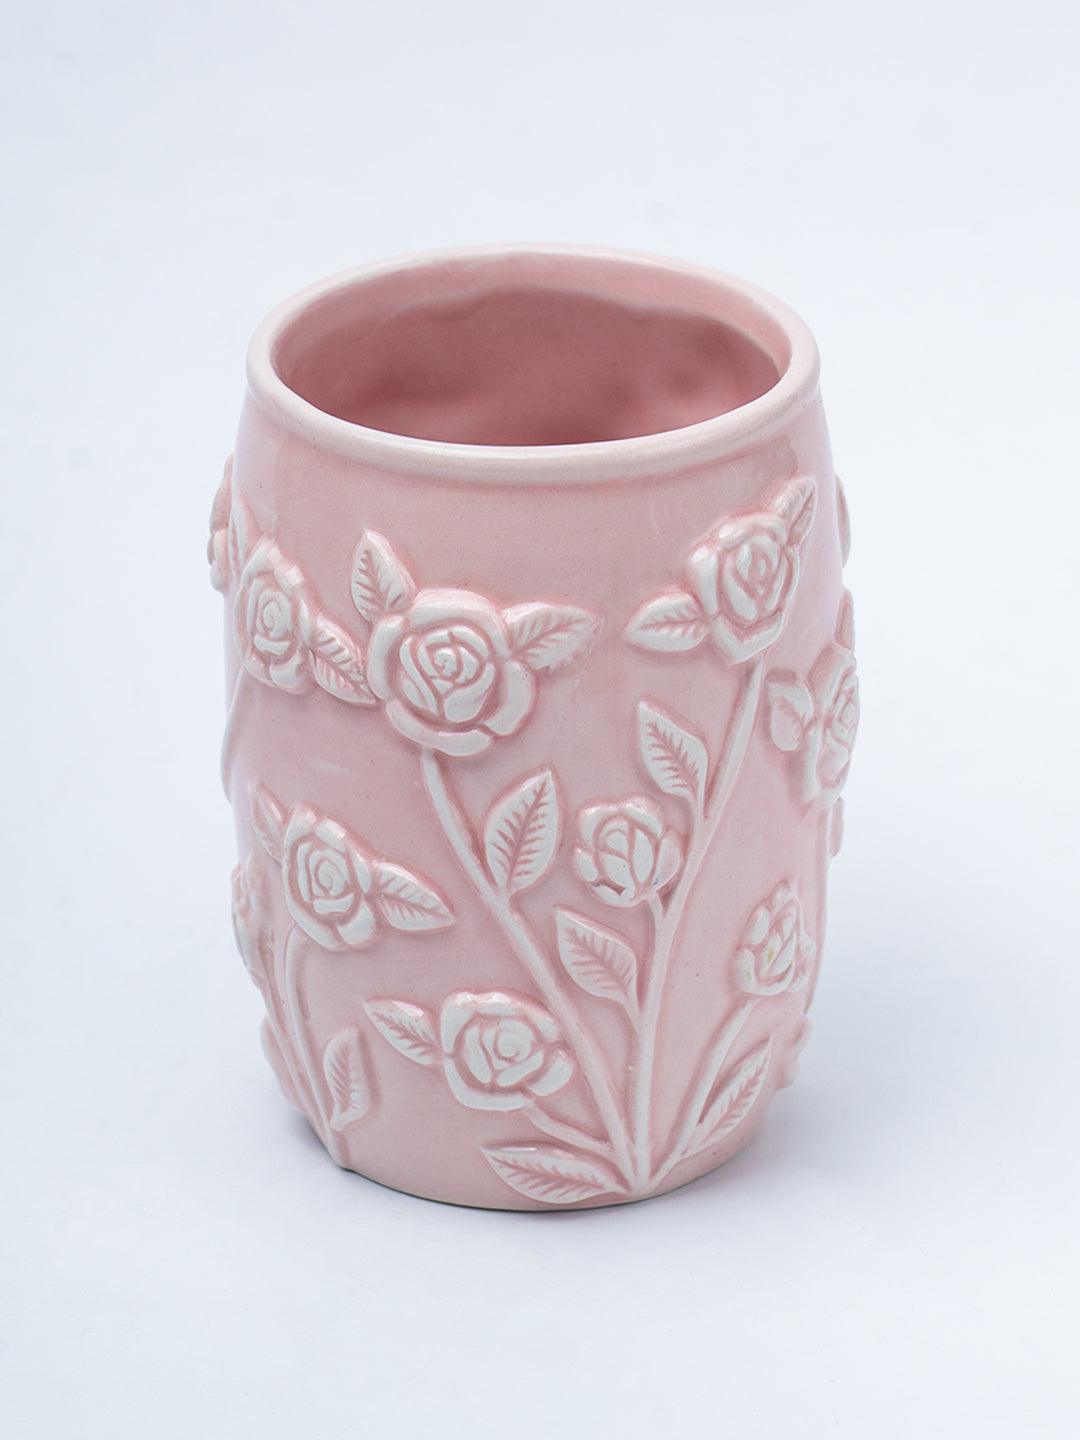 Pink Ceramic Bathroom Set Of 4 - Floral Design, Bath Accessories - 4